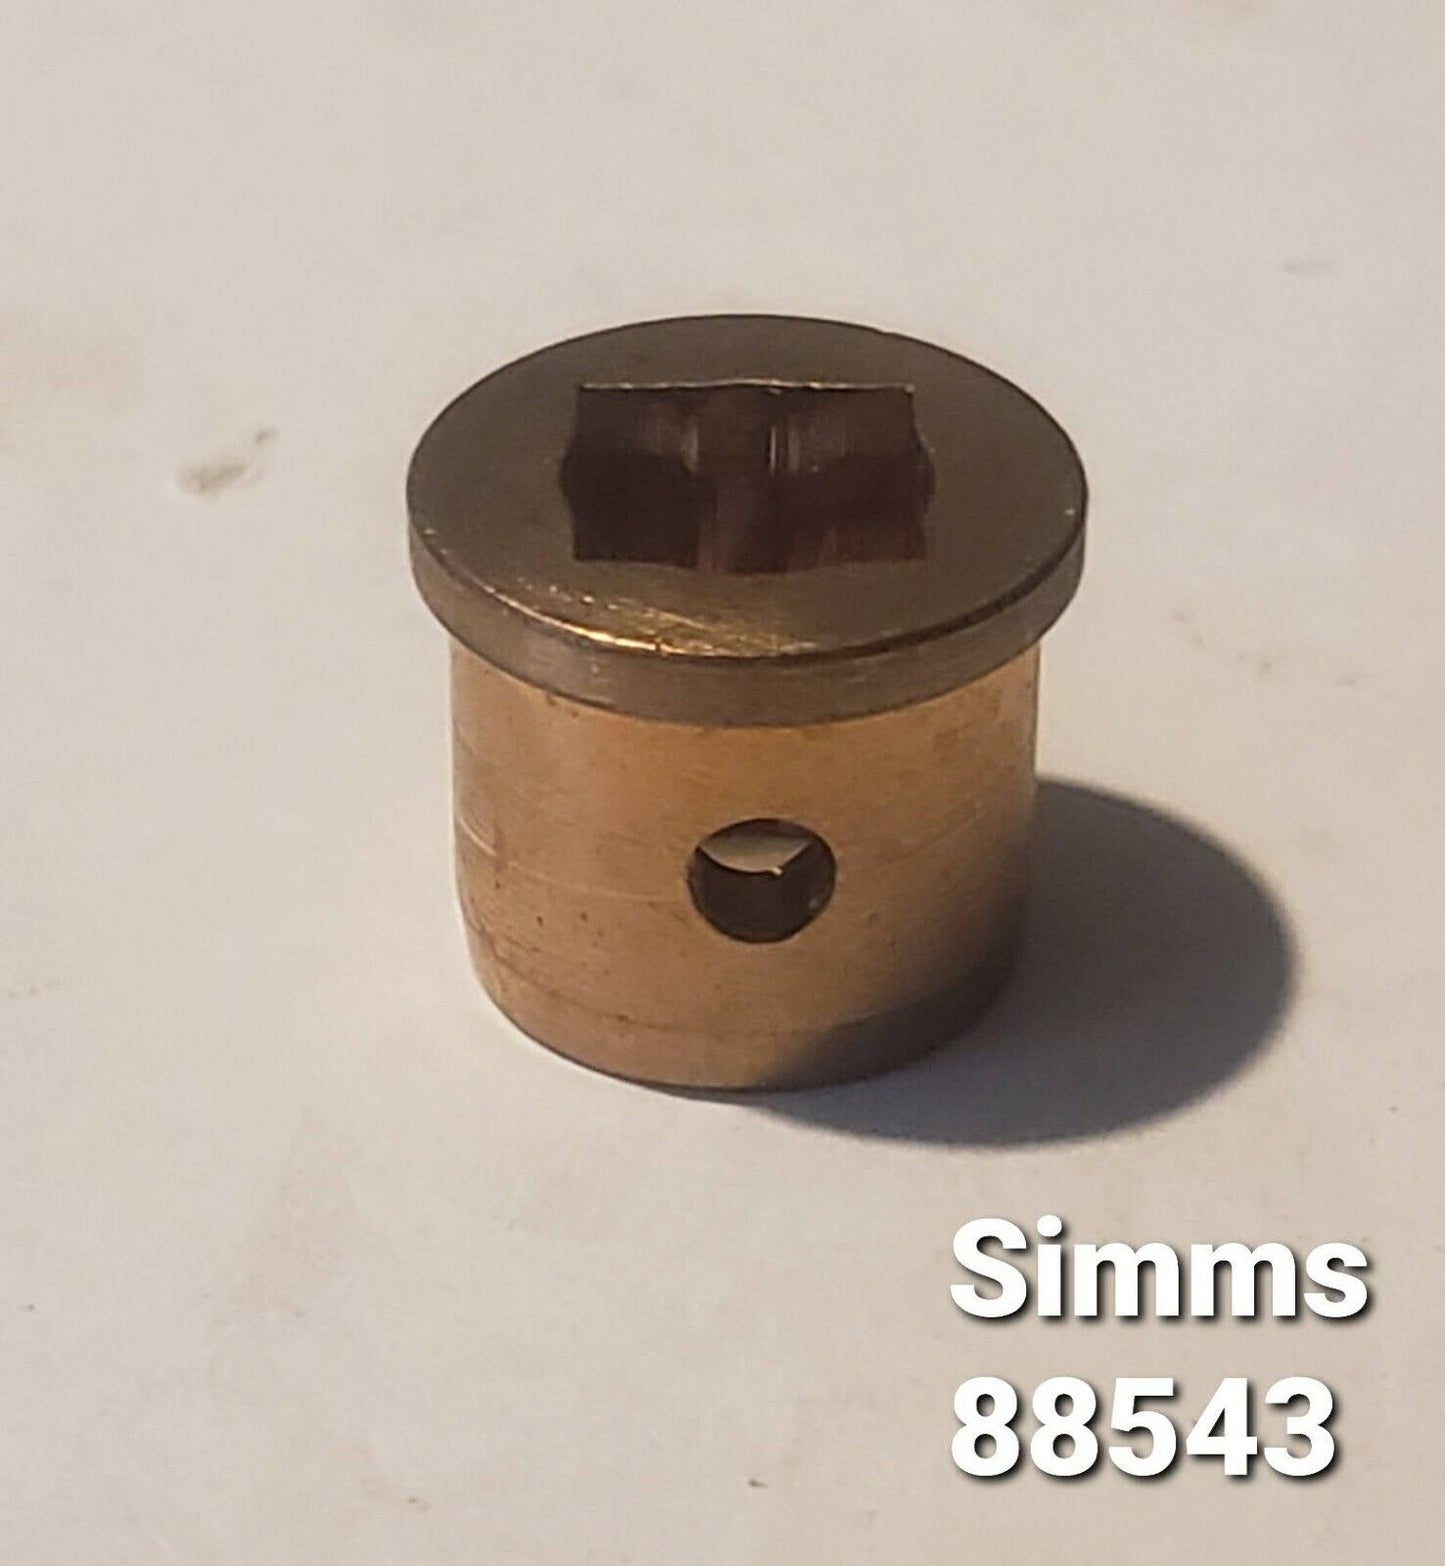 Lucas Cav Simms Bushin 88543 for Simms Injection Pump.